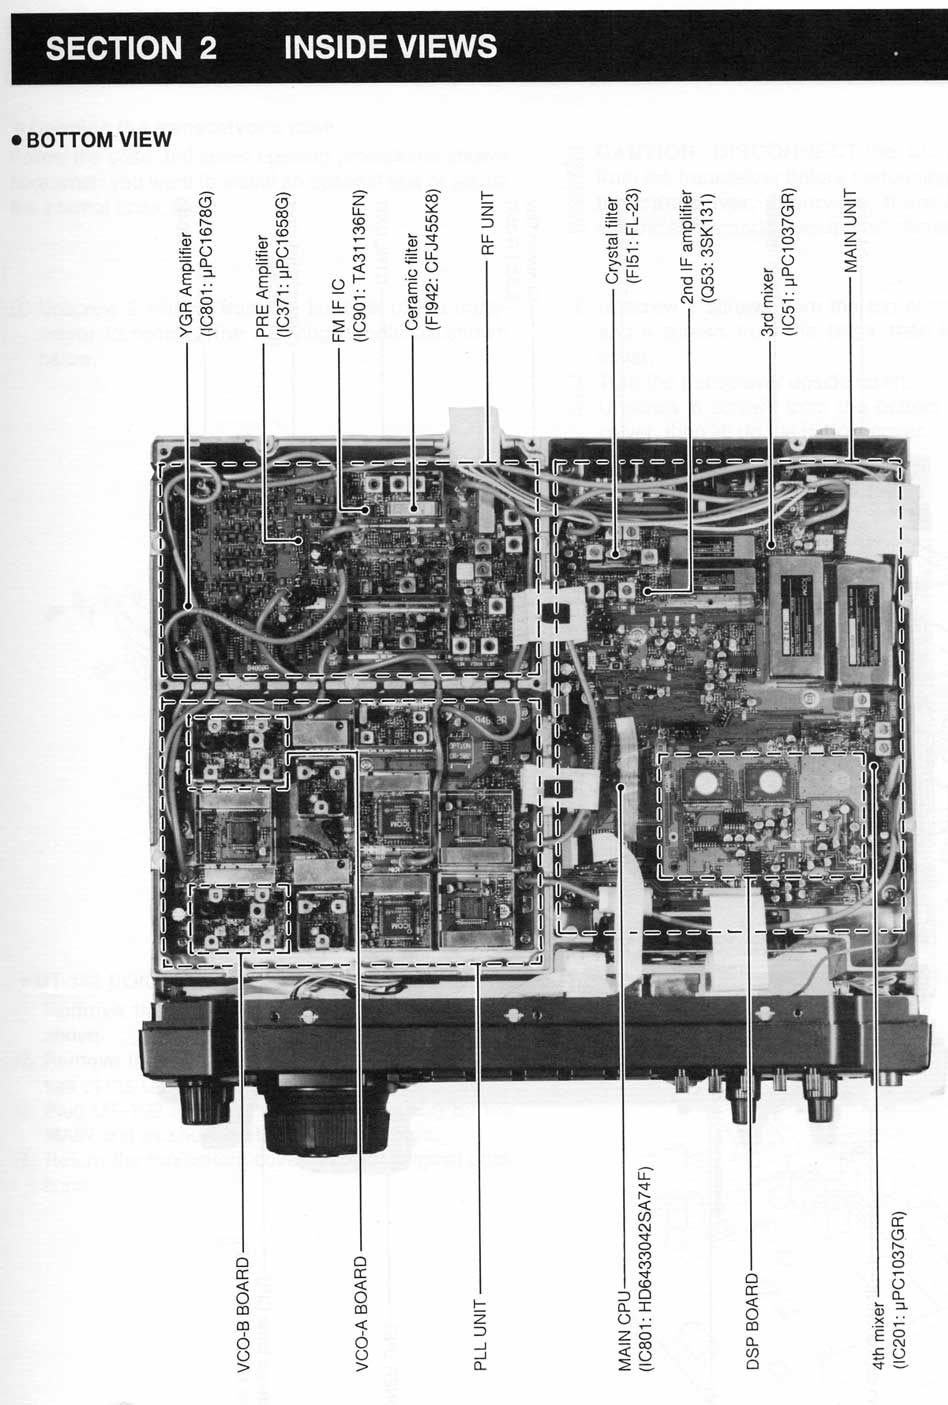 IC-756 interior bottom view (Service Manual, p. 2-1)